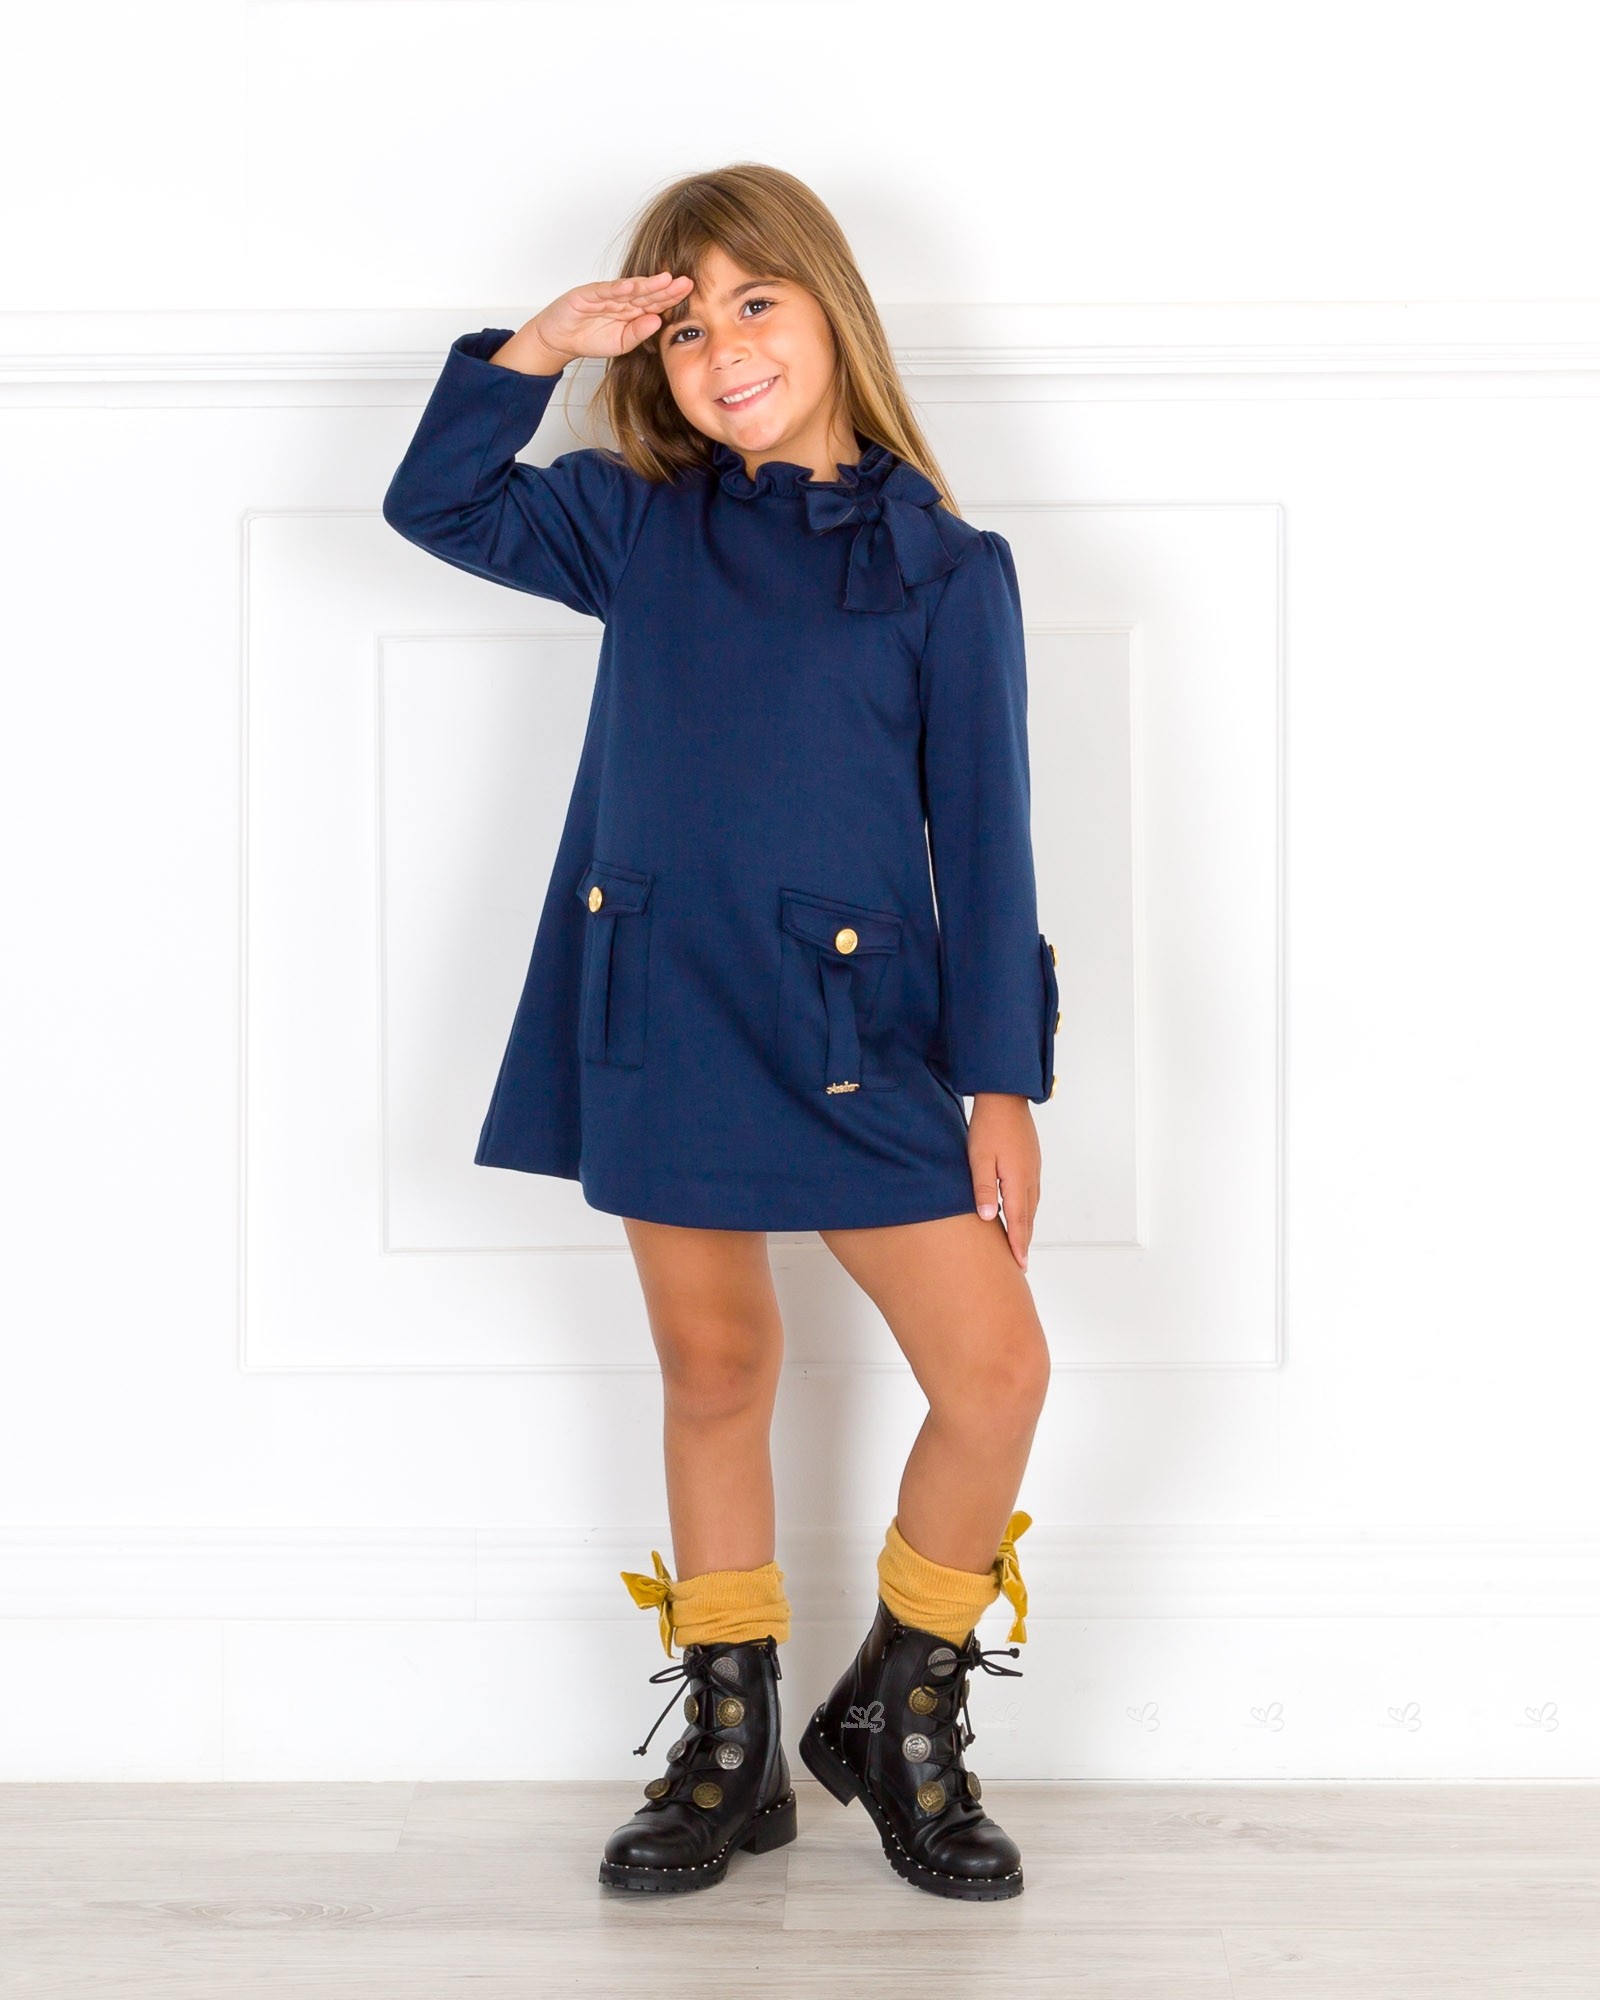 Girls Navy  Blue  Jersey Dress Outfit  Mustard Long Socks 